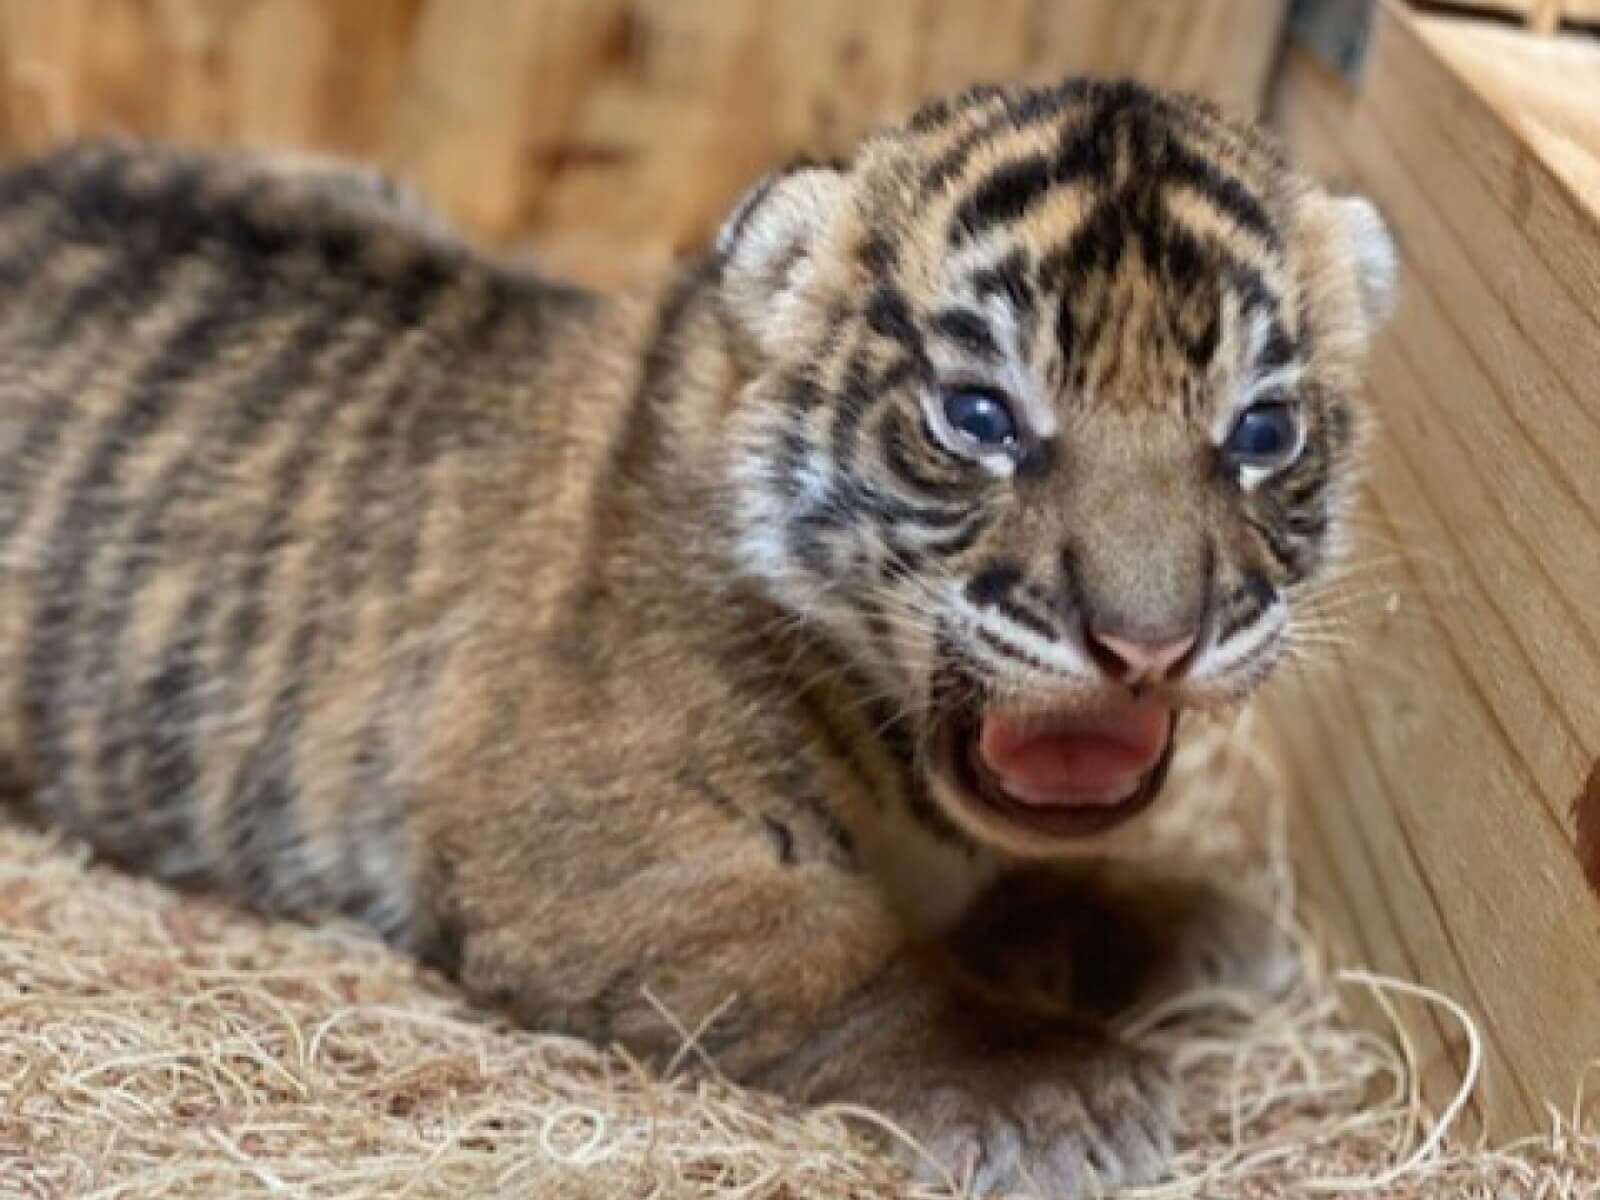 Watch: Rare newborn Sumatran tiger takes first steps at Memphis Zoo